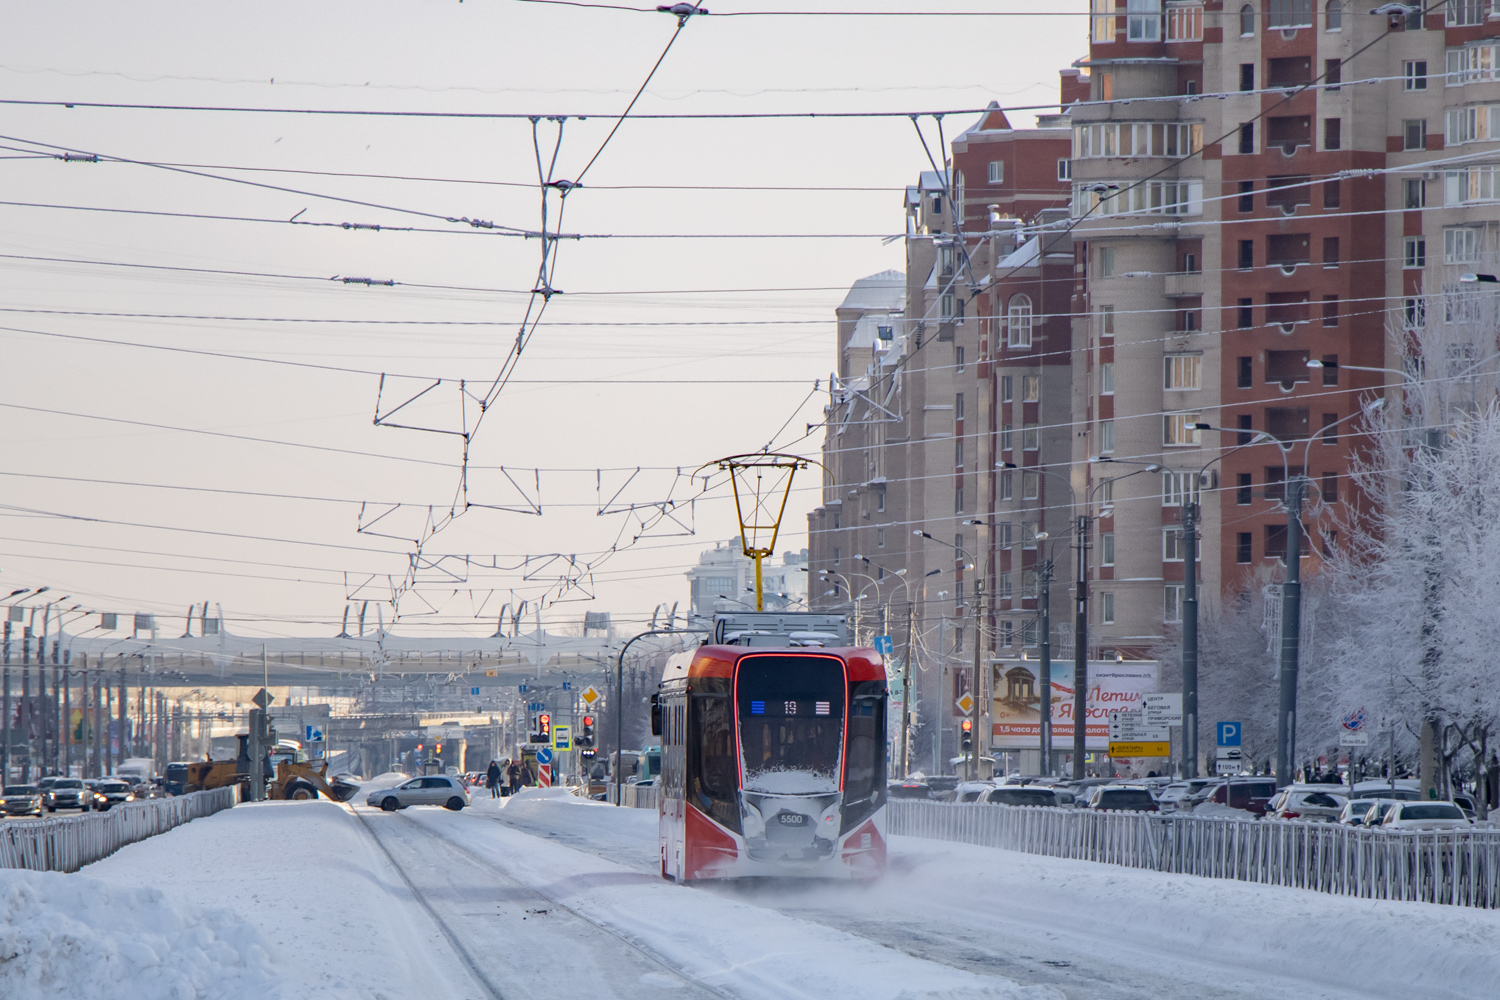 St Petersburg, 71-628-02 nr. 5500; St Petersburg — Tram lines and infrastructure